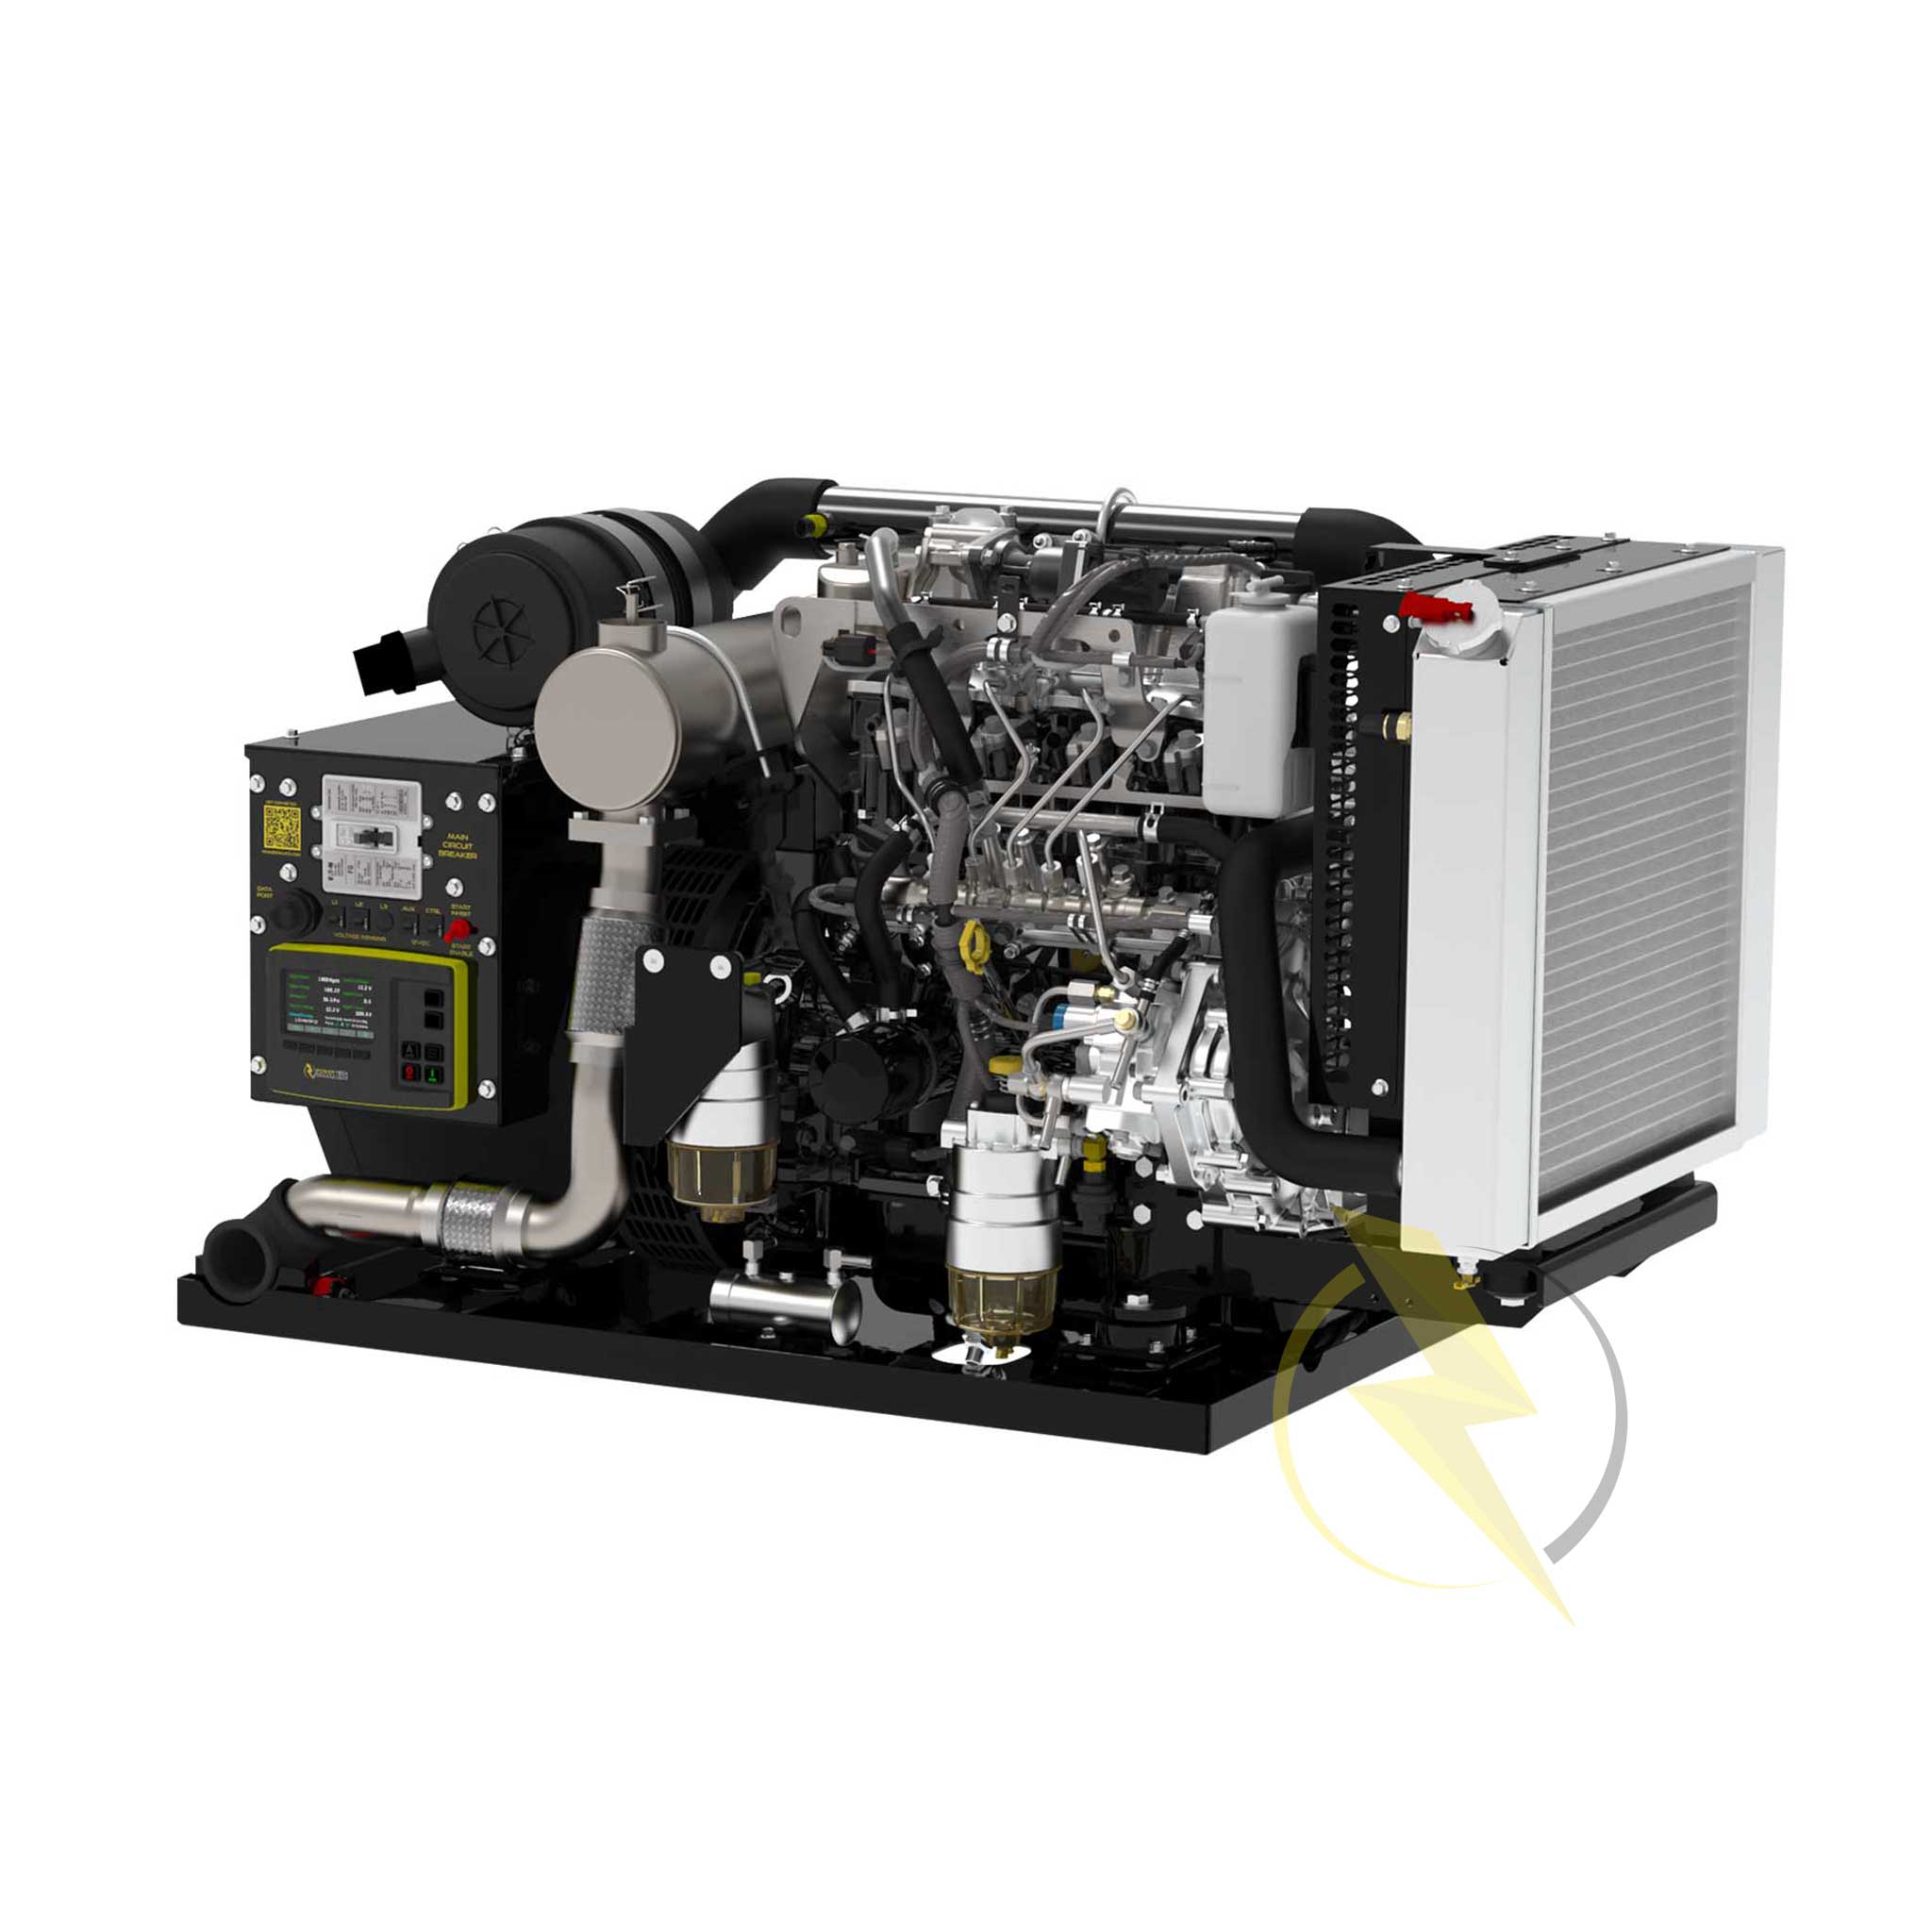 Modstand nedadgående gaben PowerTech Generators - 20 kW Diesel Generator for Sale